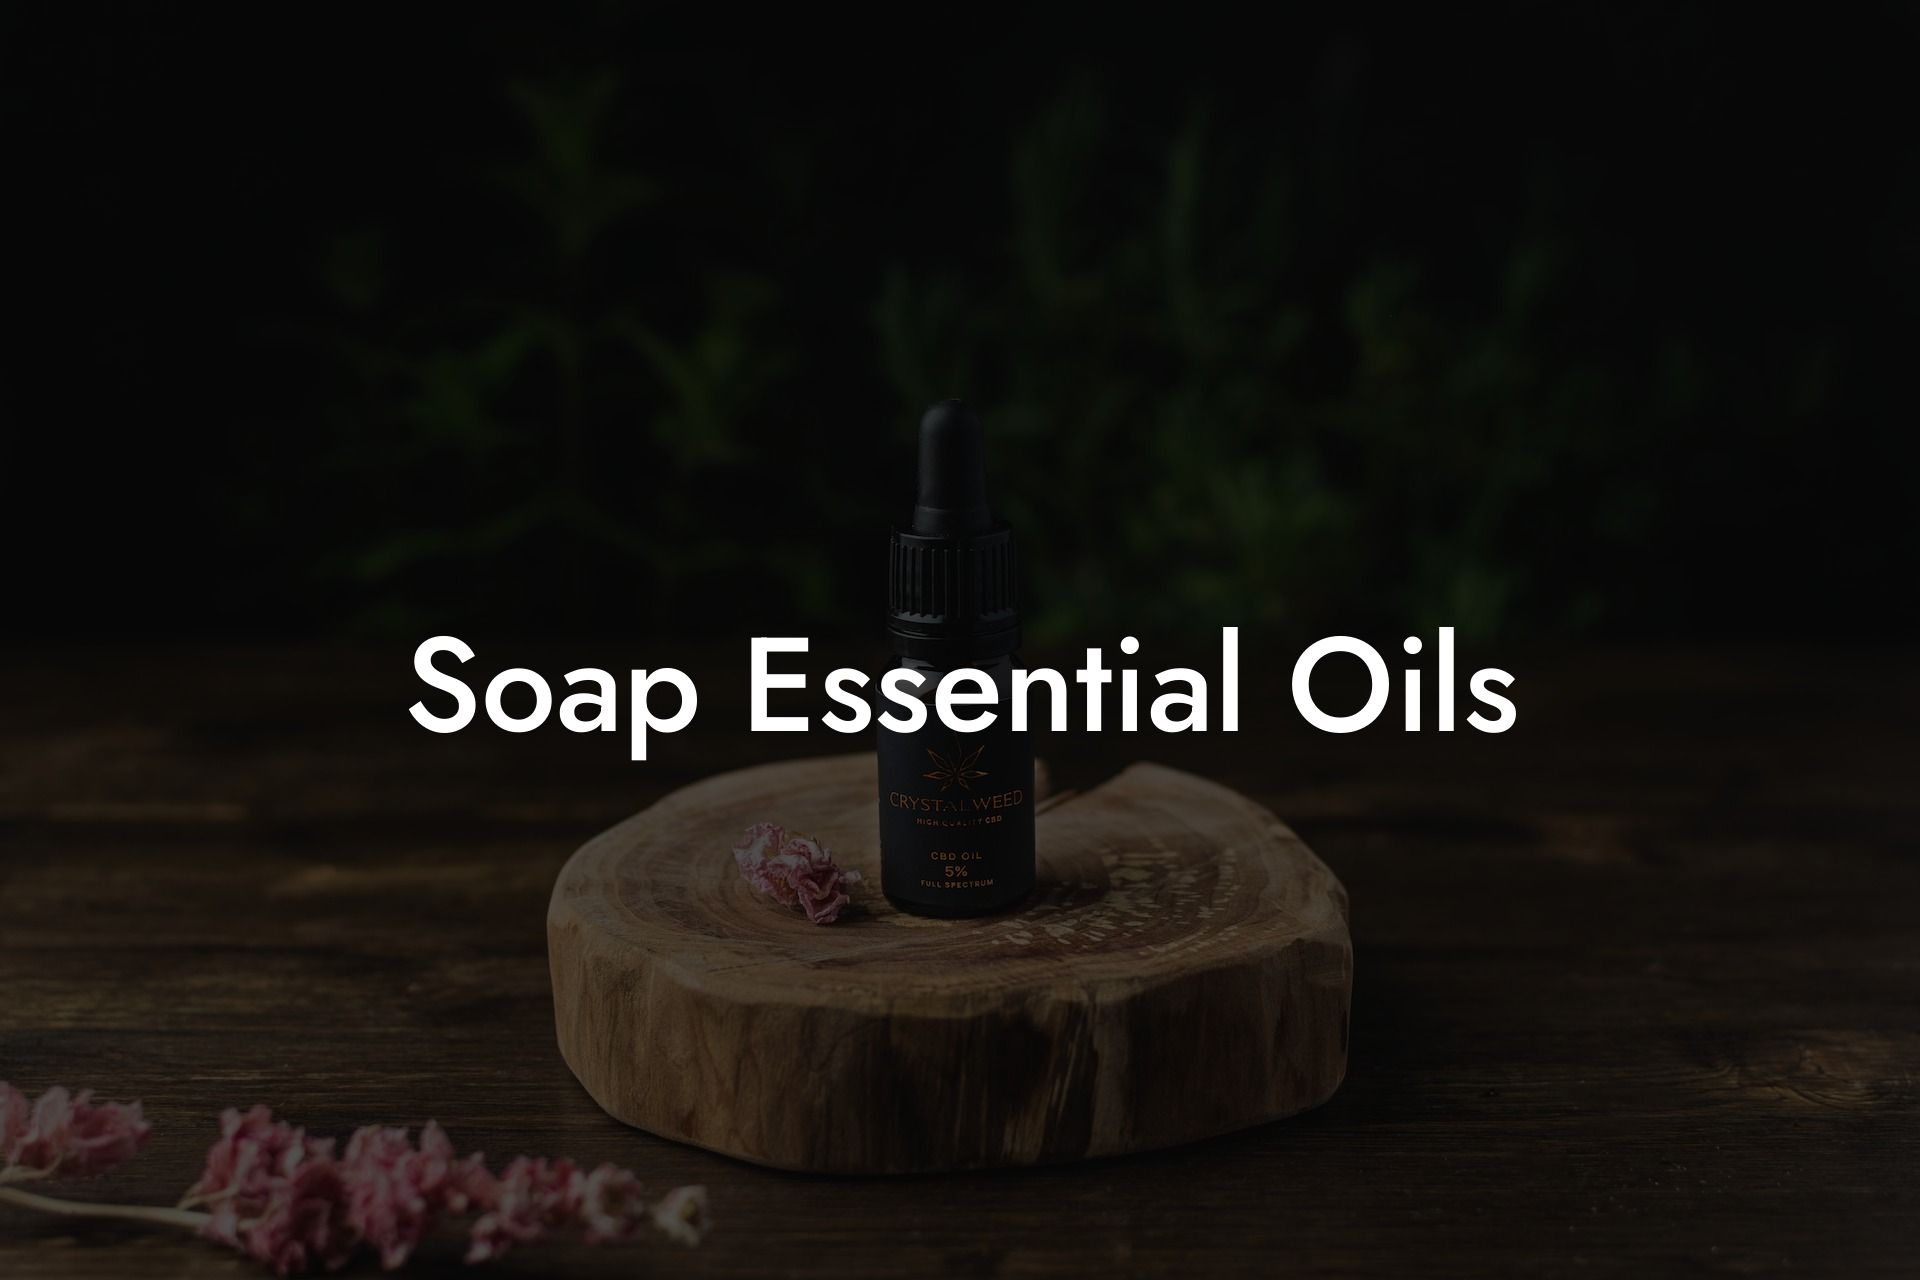 Soap Essential Oils